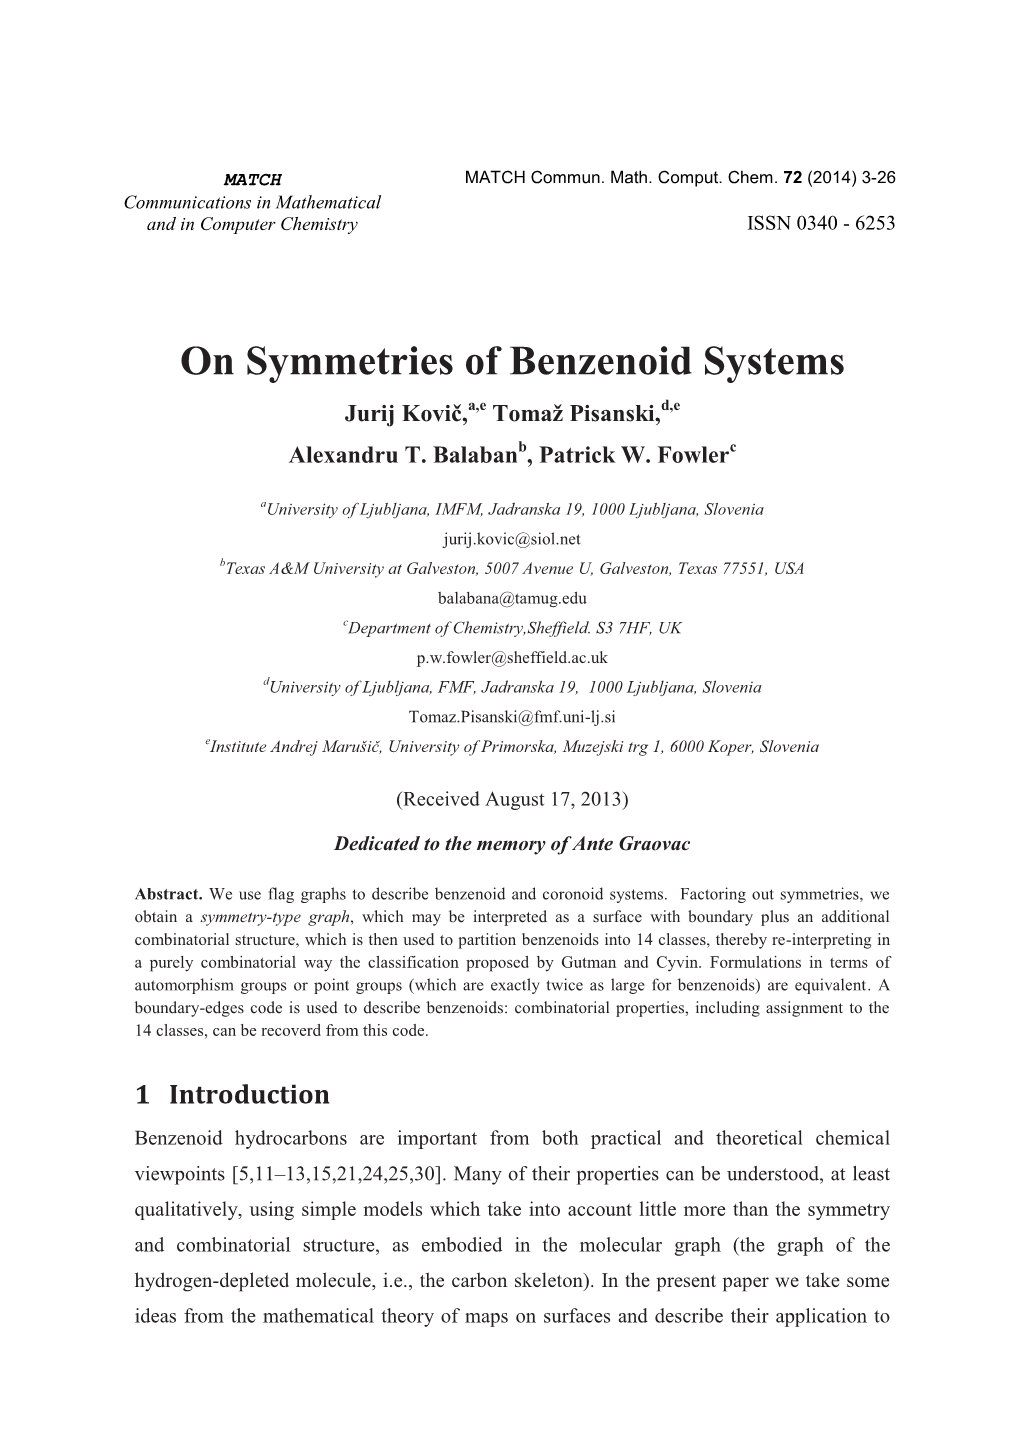 On Symmetries of Benzenoid Systems Jurij Kovič,A,E Tomaž Pisanski,D,E Alexandru T